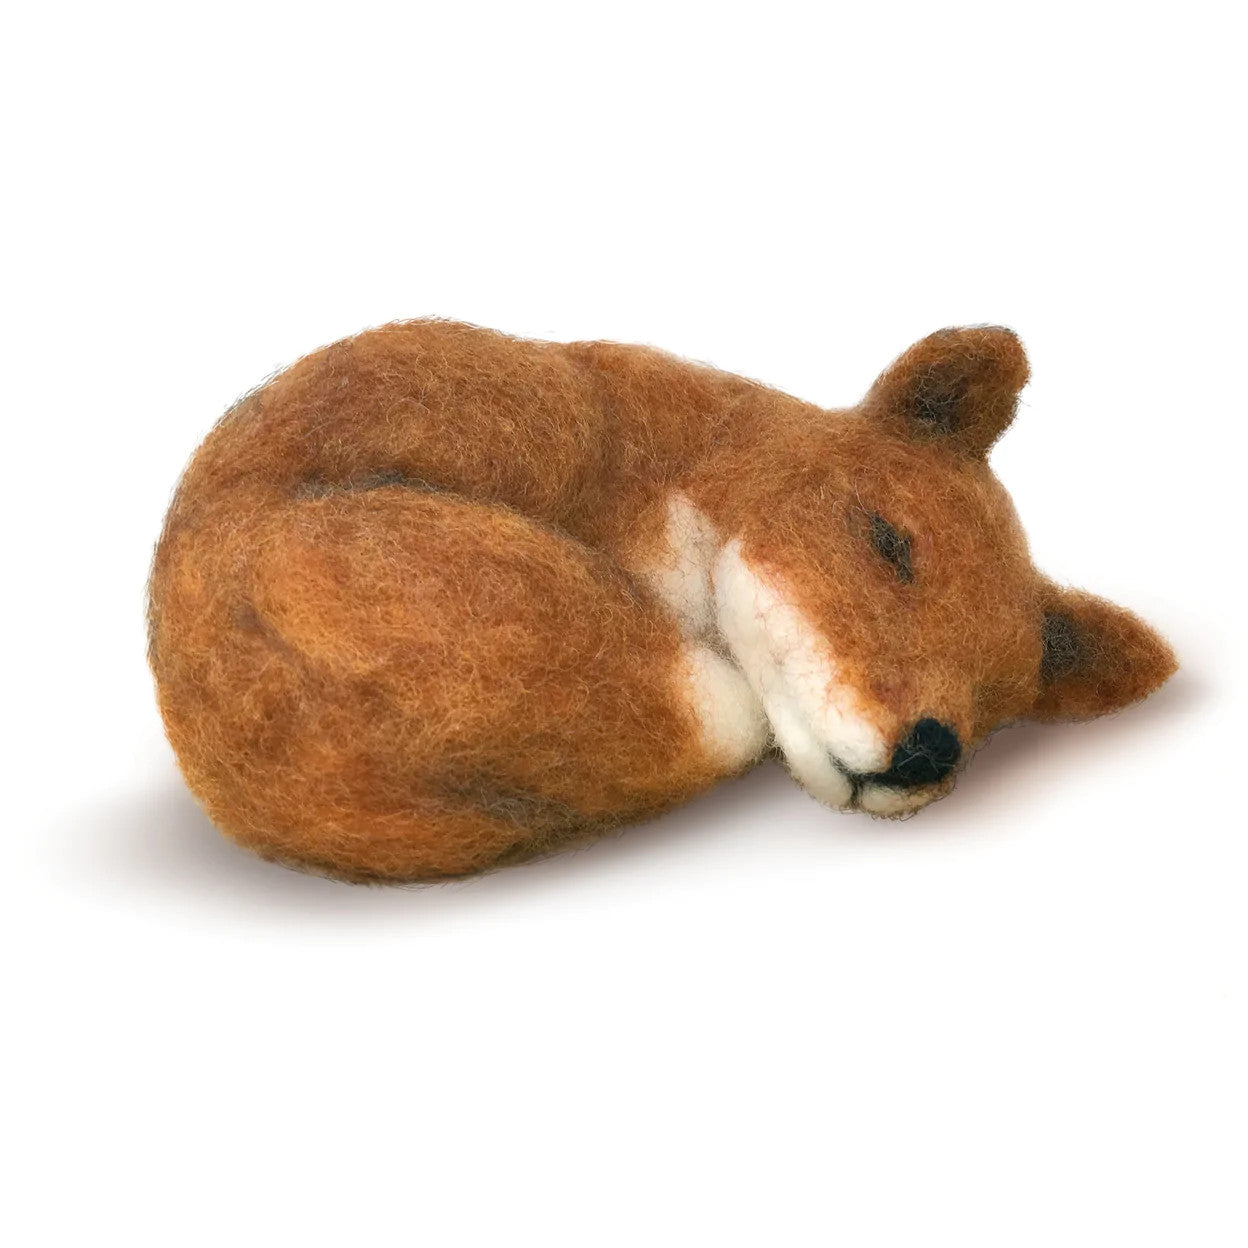 Sleepy Fox Needle Felting Kit from The Crafty Kit Co. Made in Scotland